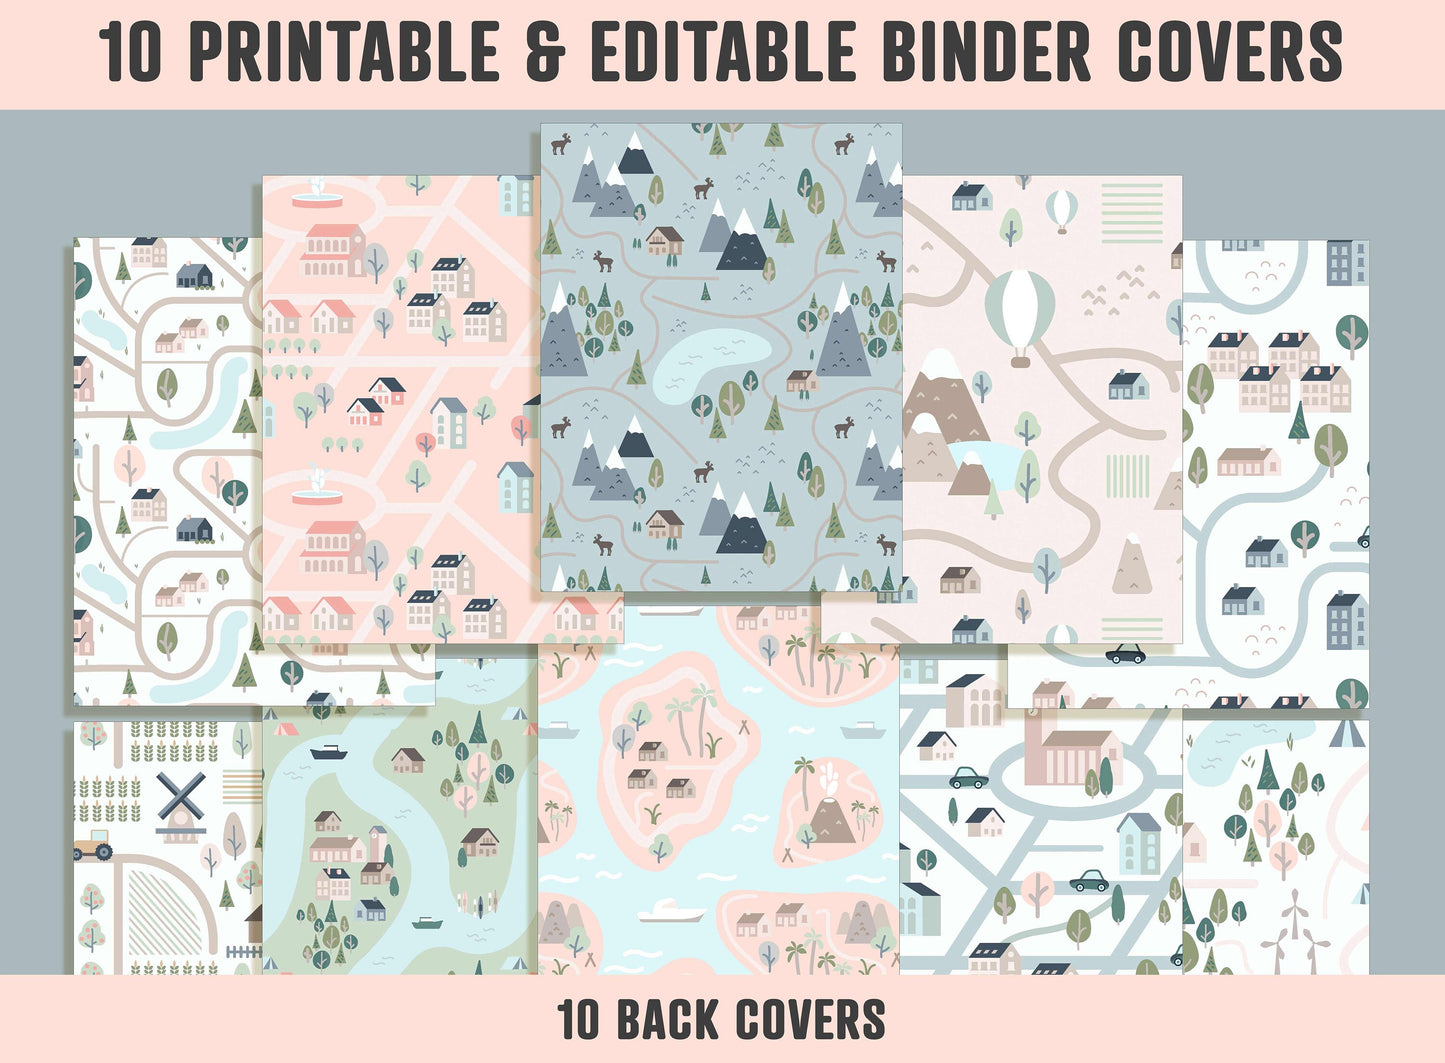 Adventure Binder Cover, 10 Printable & Editable Binder Covers + Spines, Binder Inserts, Teacher/School Planner Cover Template